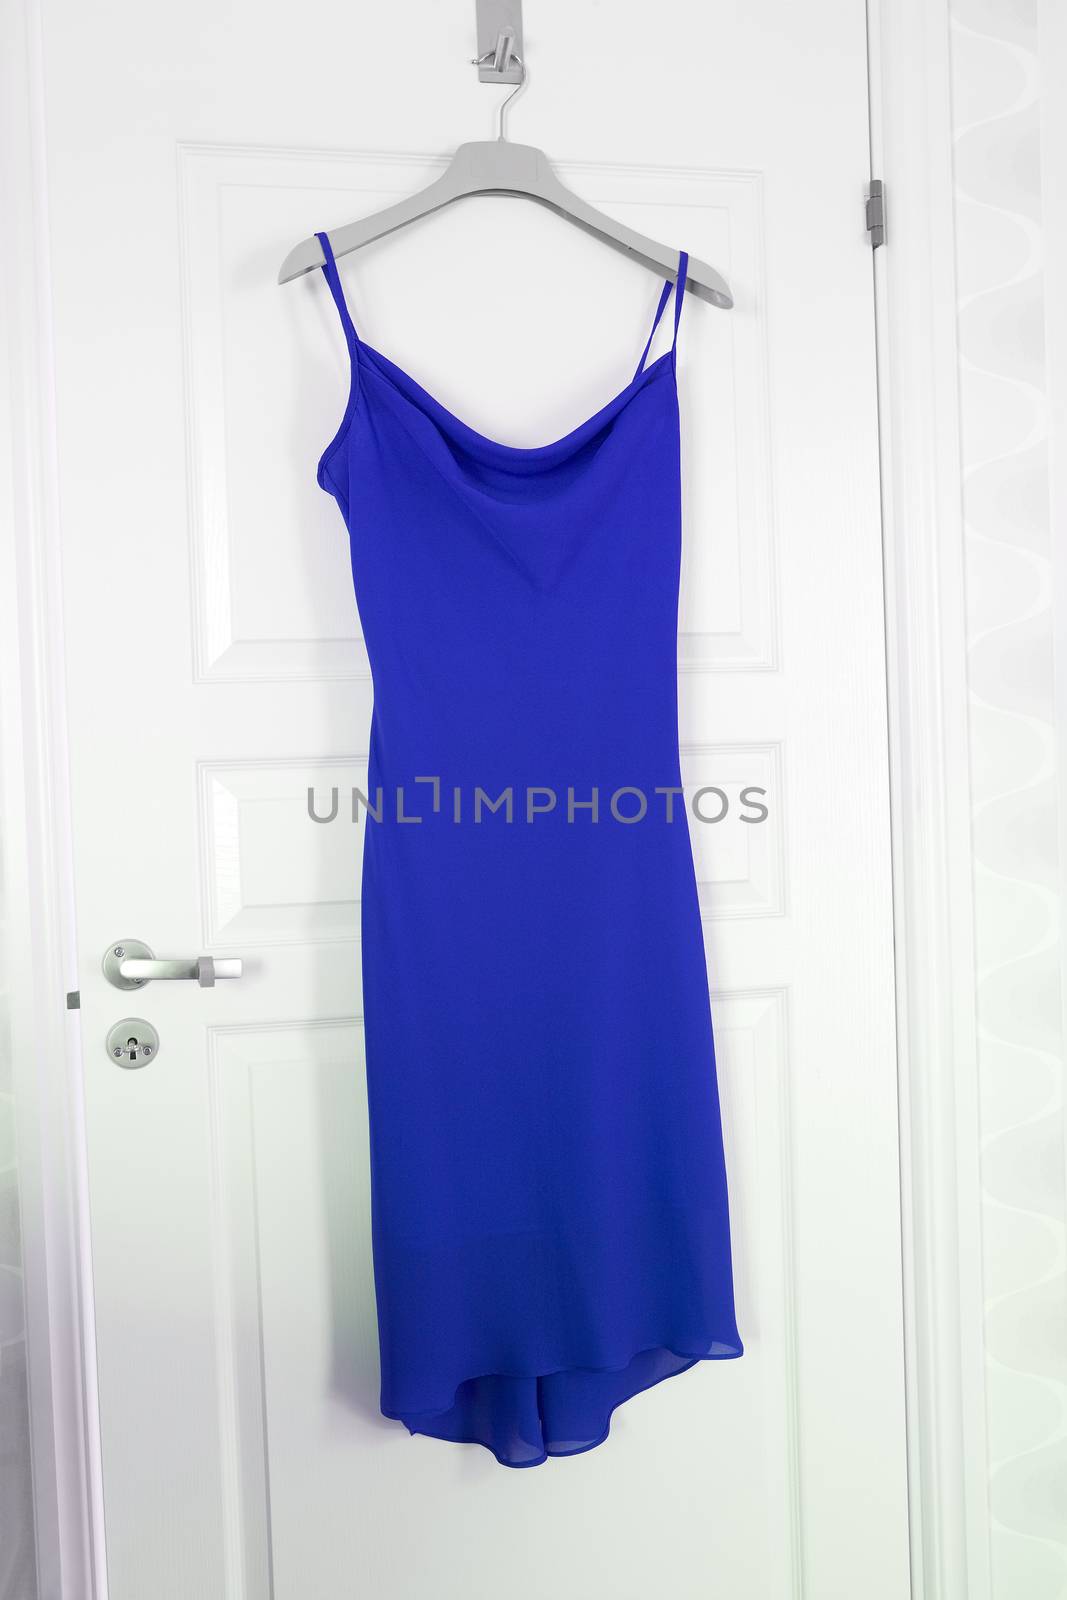 Blue Dress hanging on a door